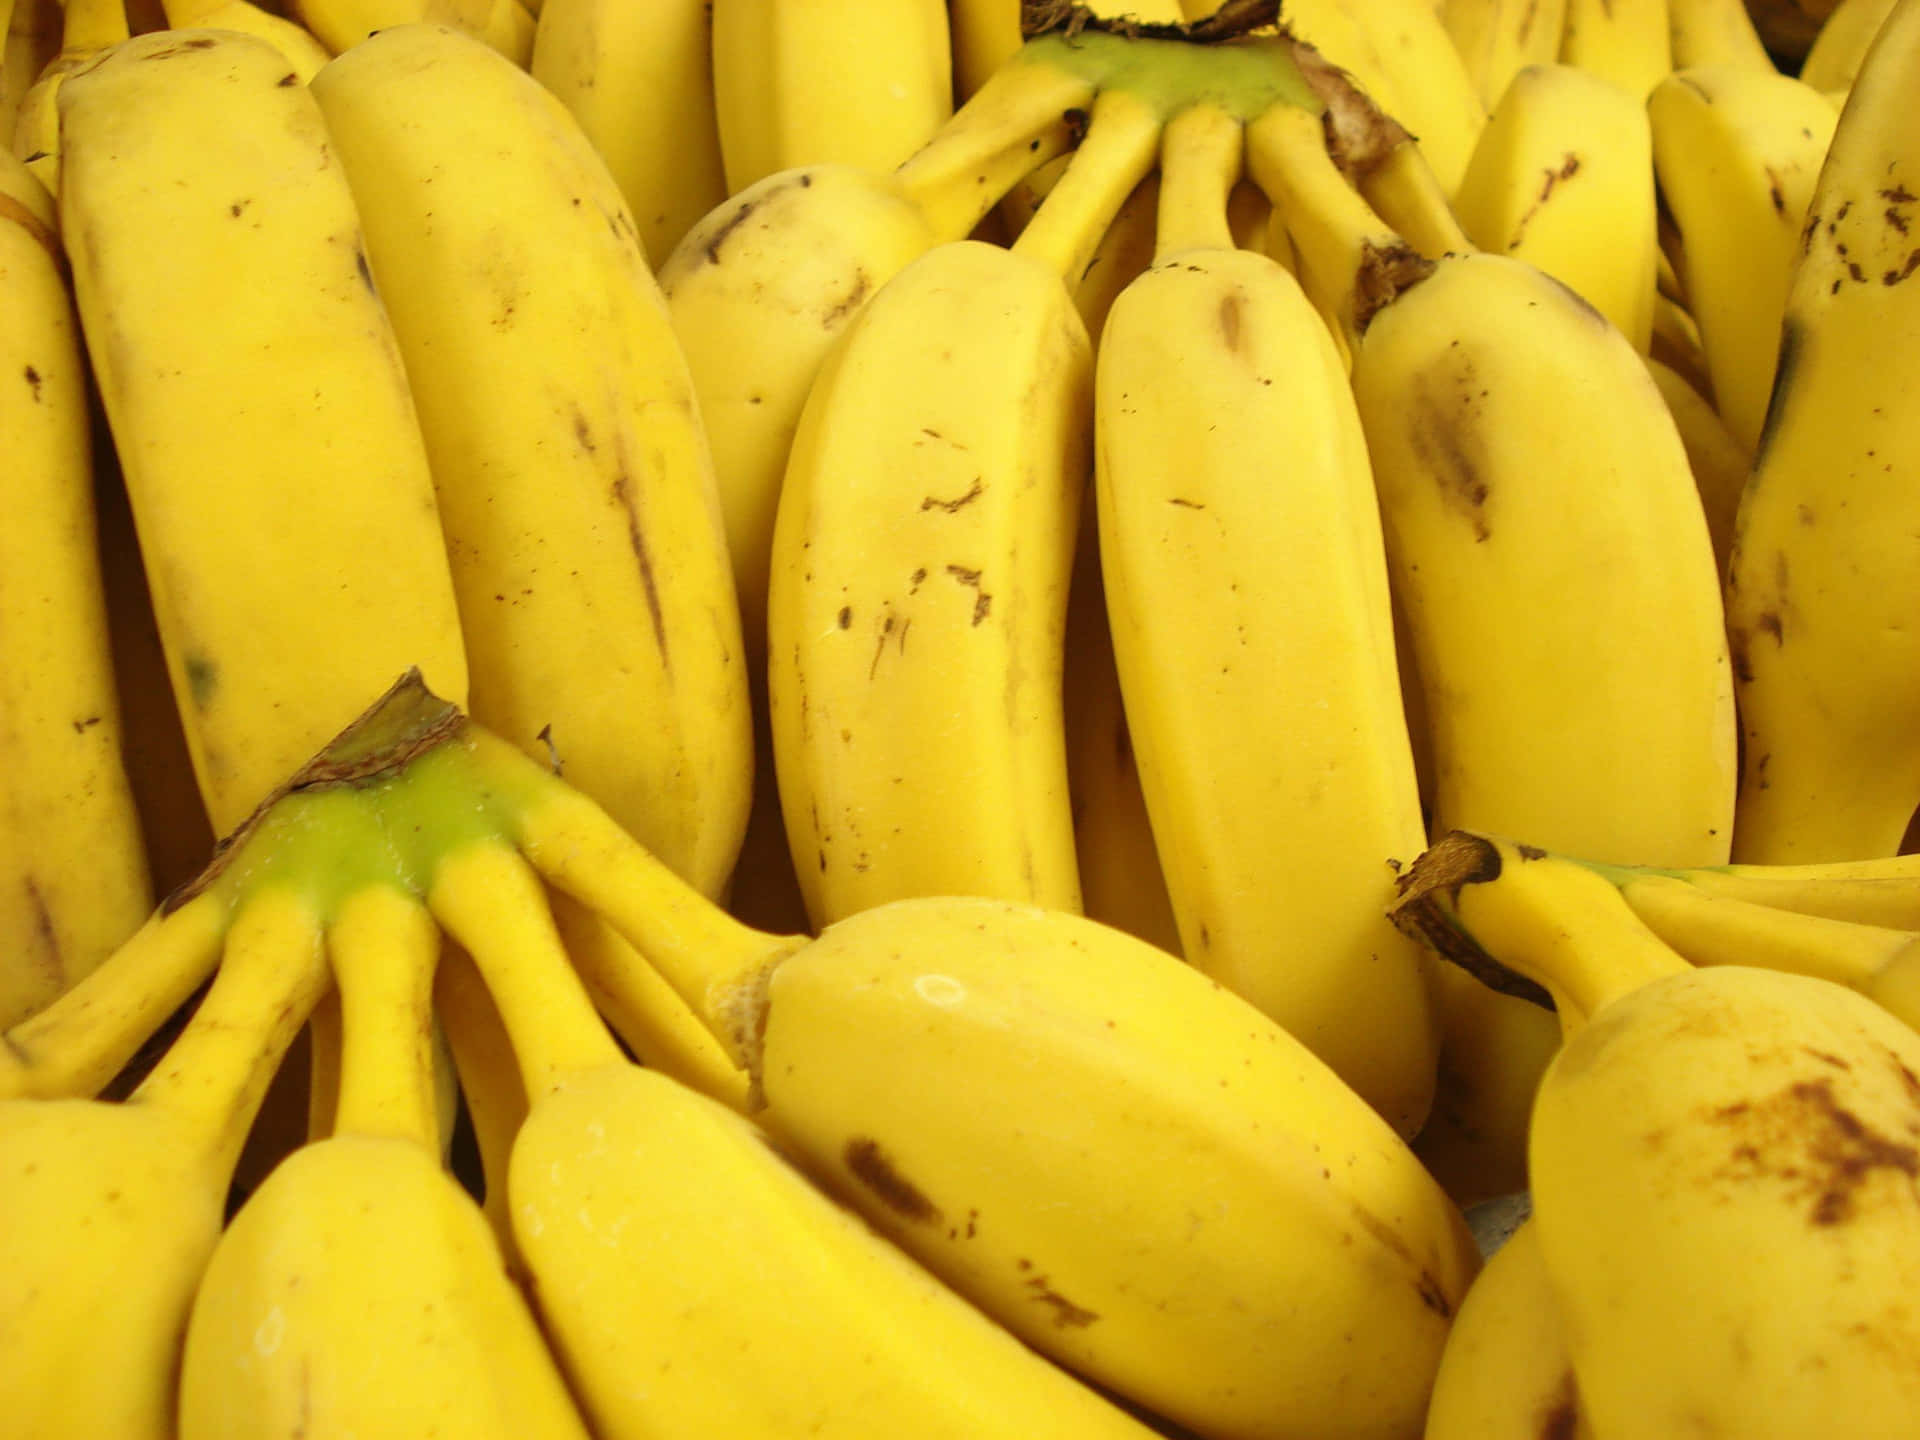 "Fresh, ripe bananas perfect for eating or baking!"